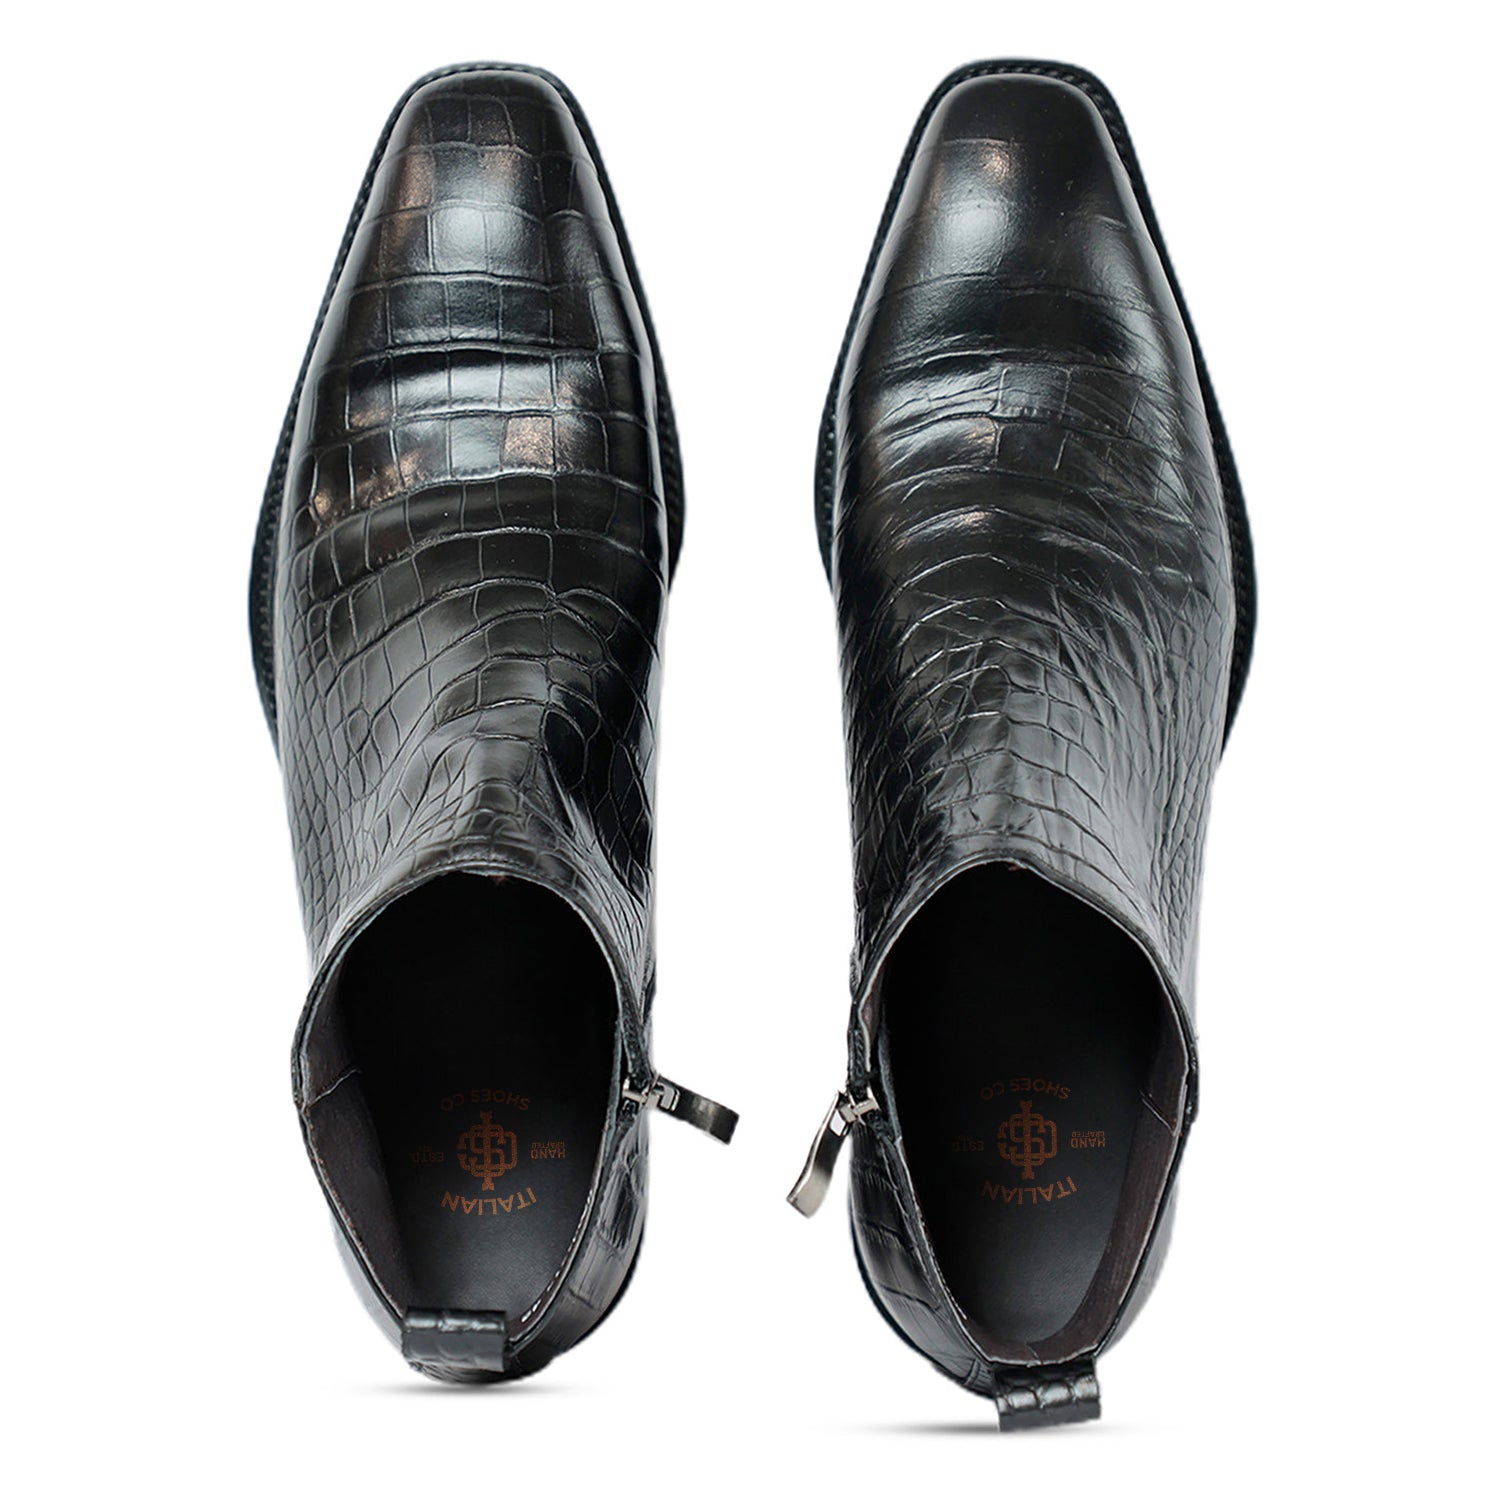 Antilia Croco Leather Black Boots